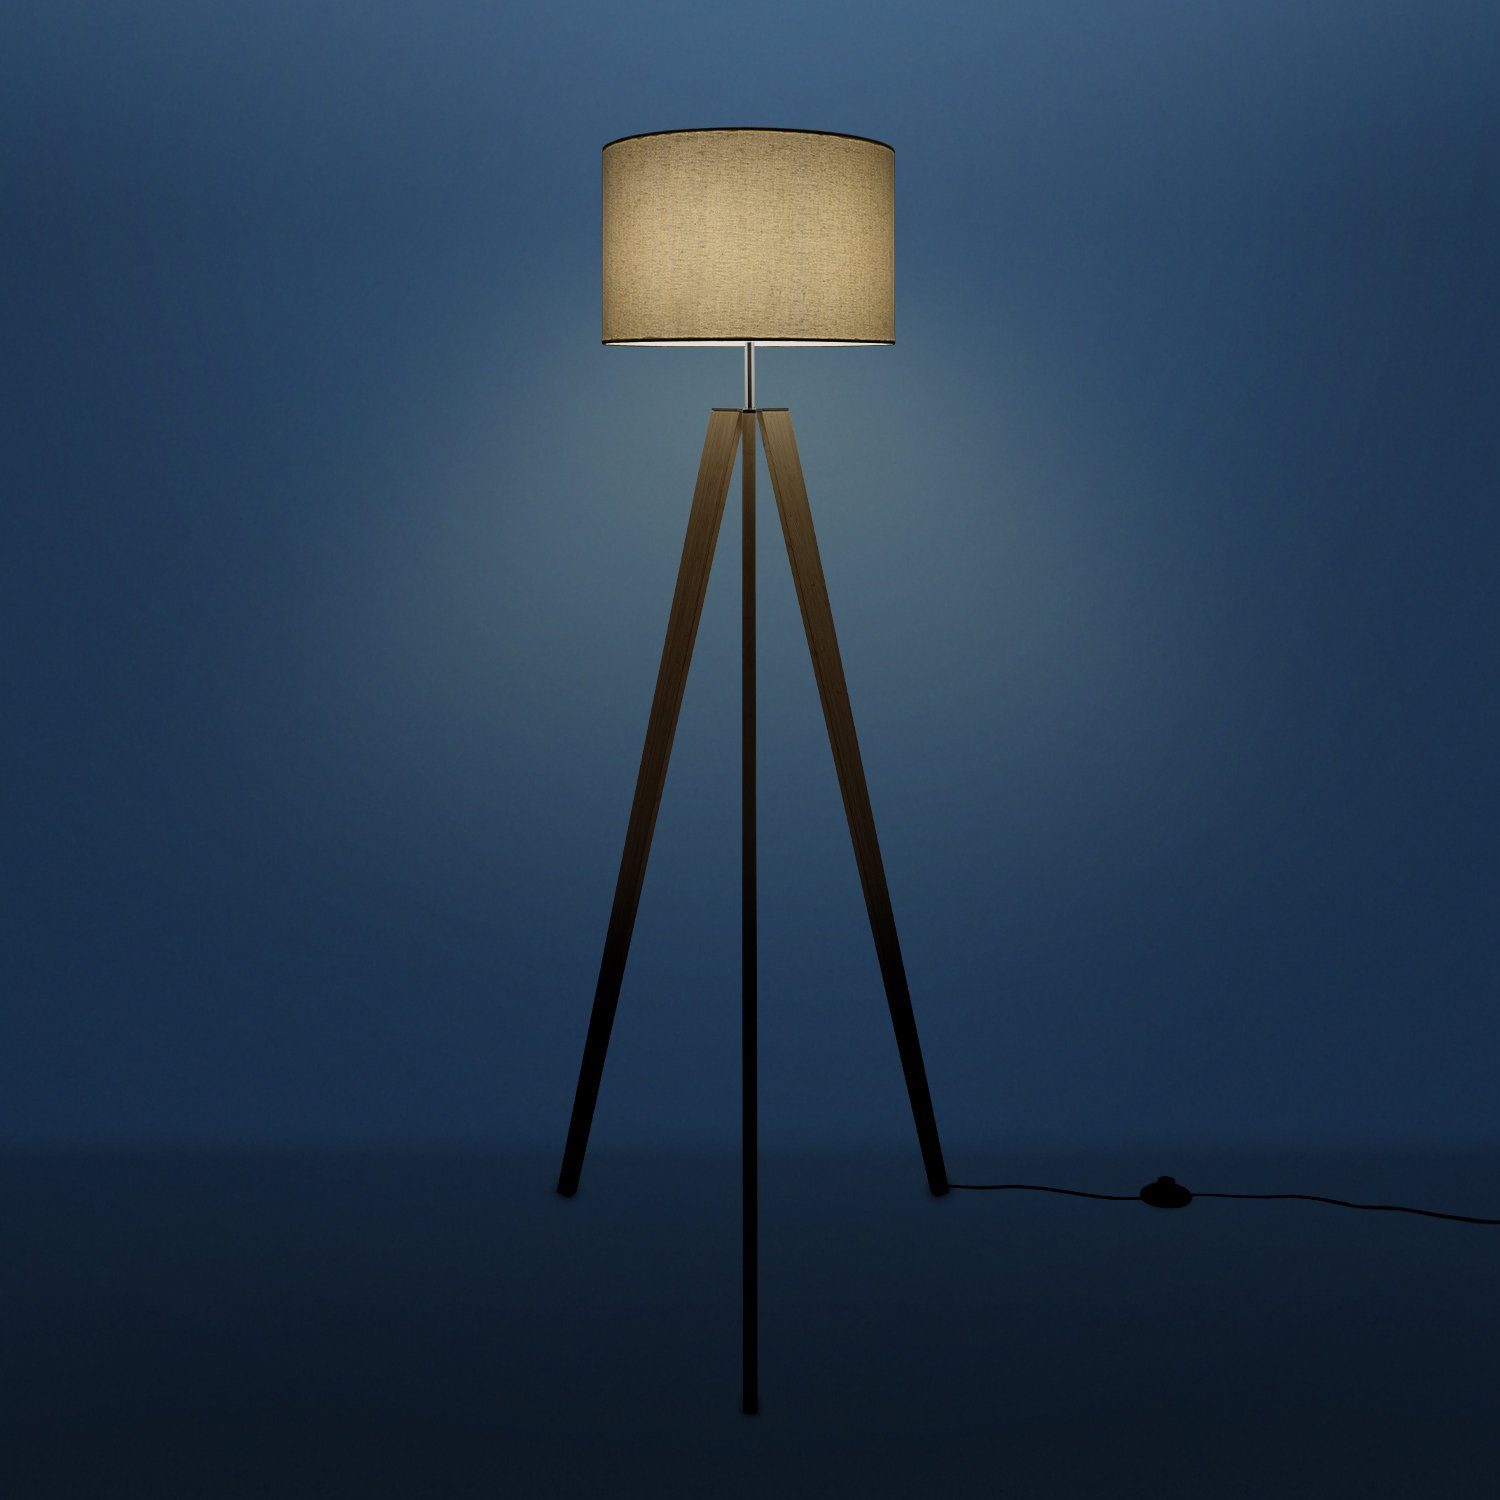 Paco Home Stehlampe Canvas Color, uni Vintage Wohnzimmer LED ohne Fuß Skandinavischer Leuchtmittel, Lampe E27 Stehlampe Stil